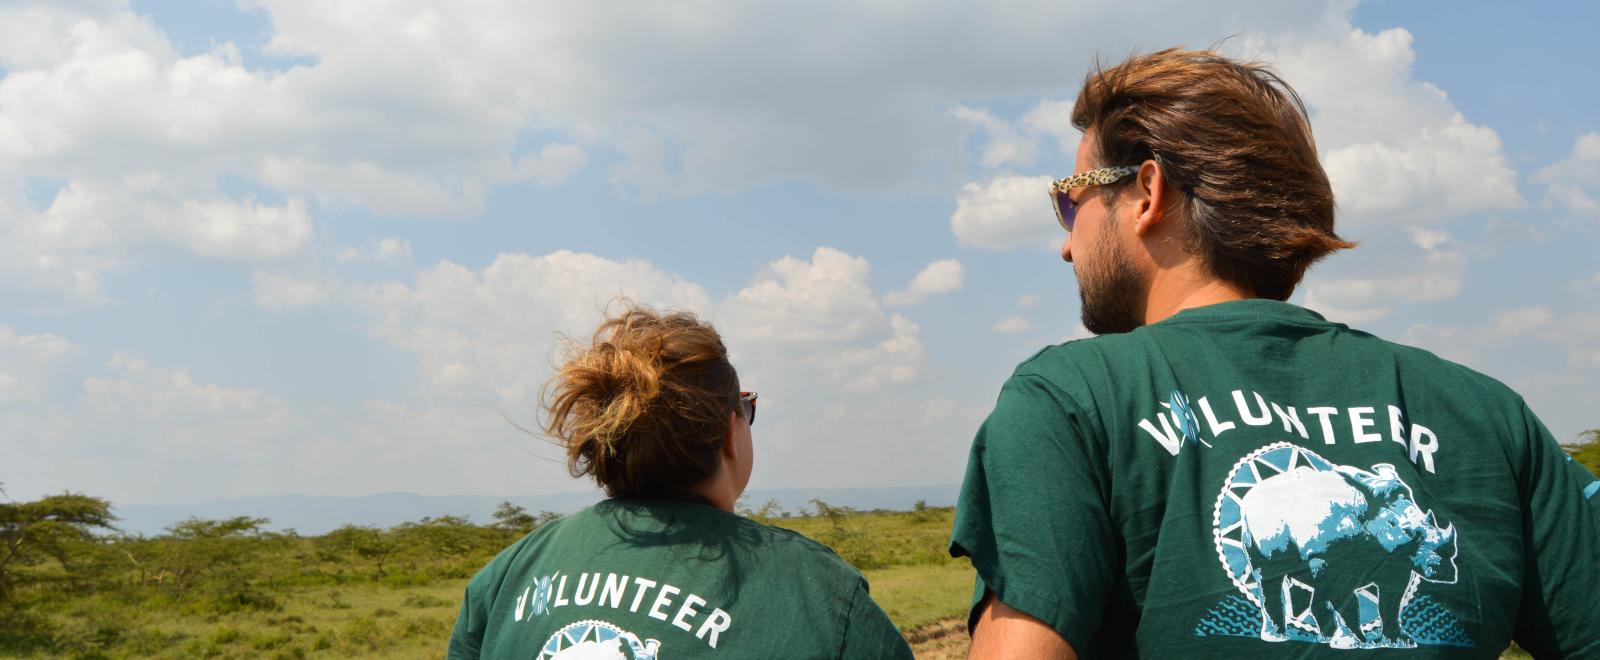 Conservation Volunteers in Kenya 